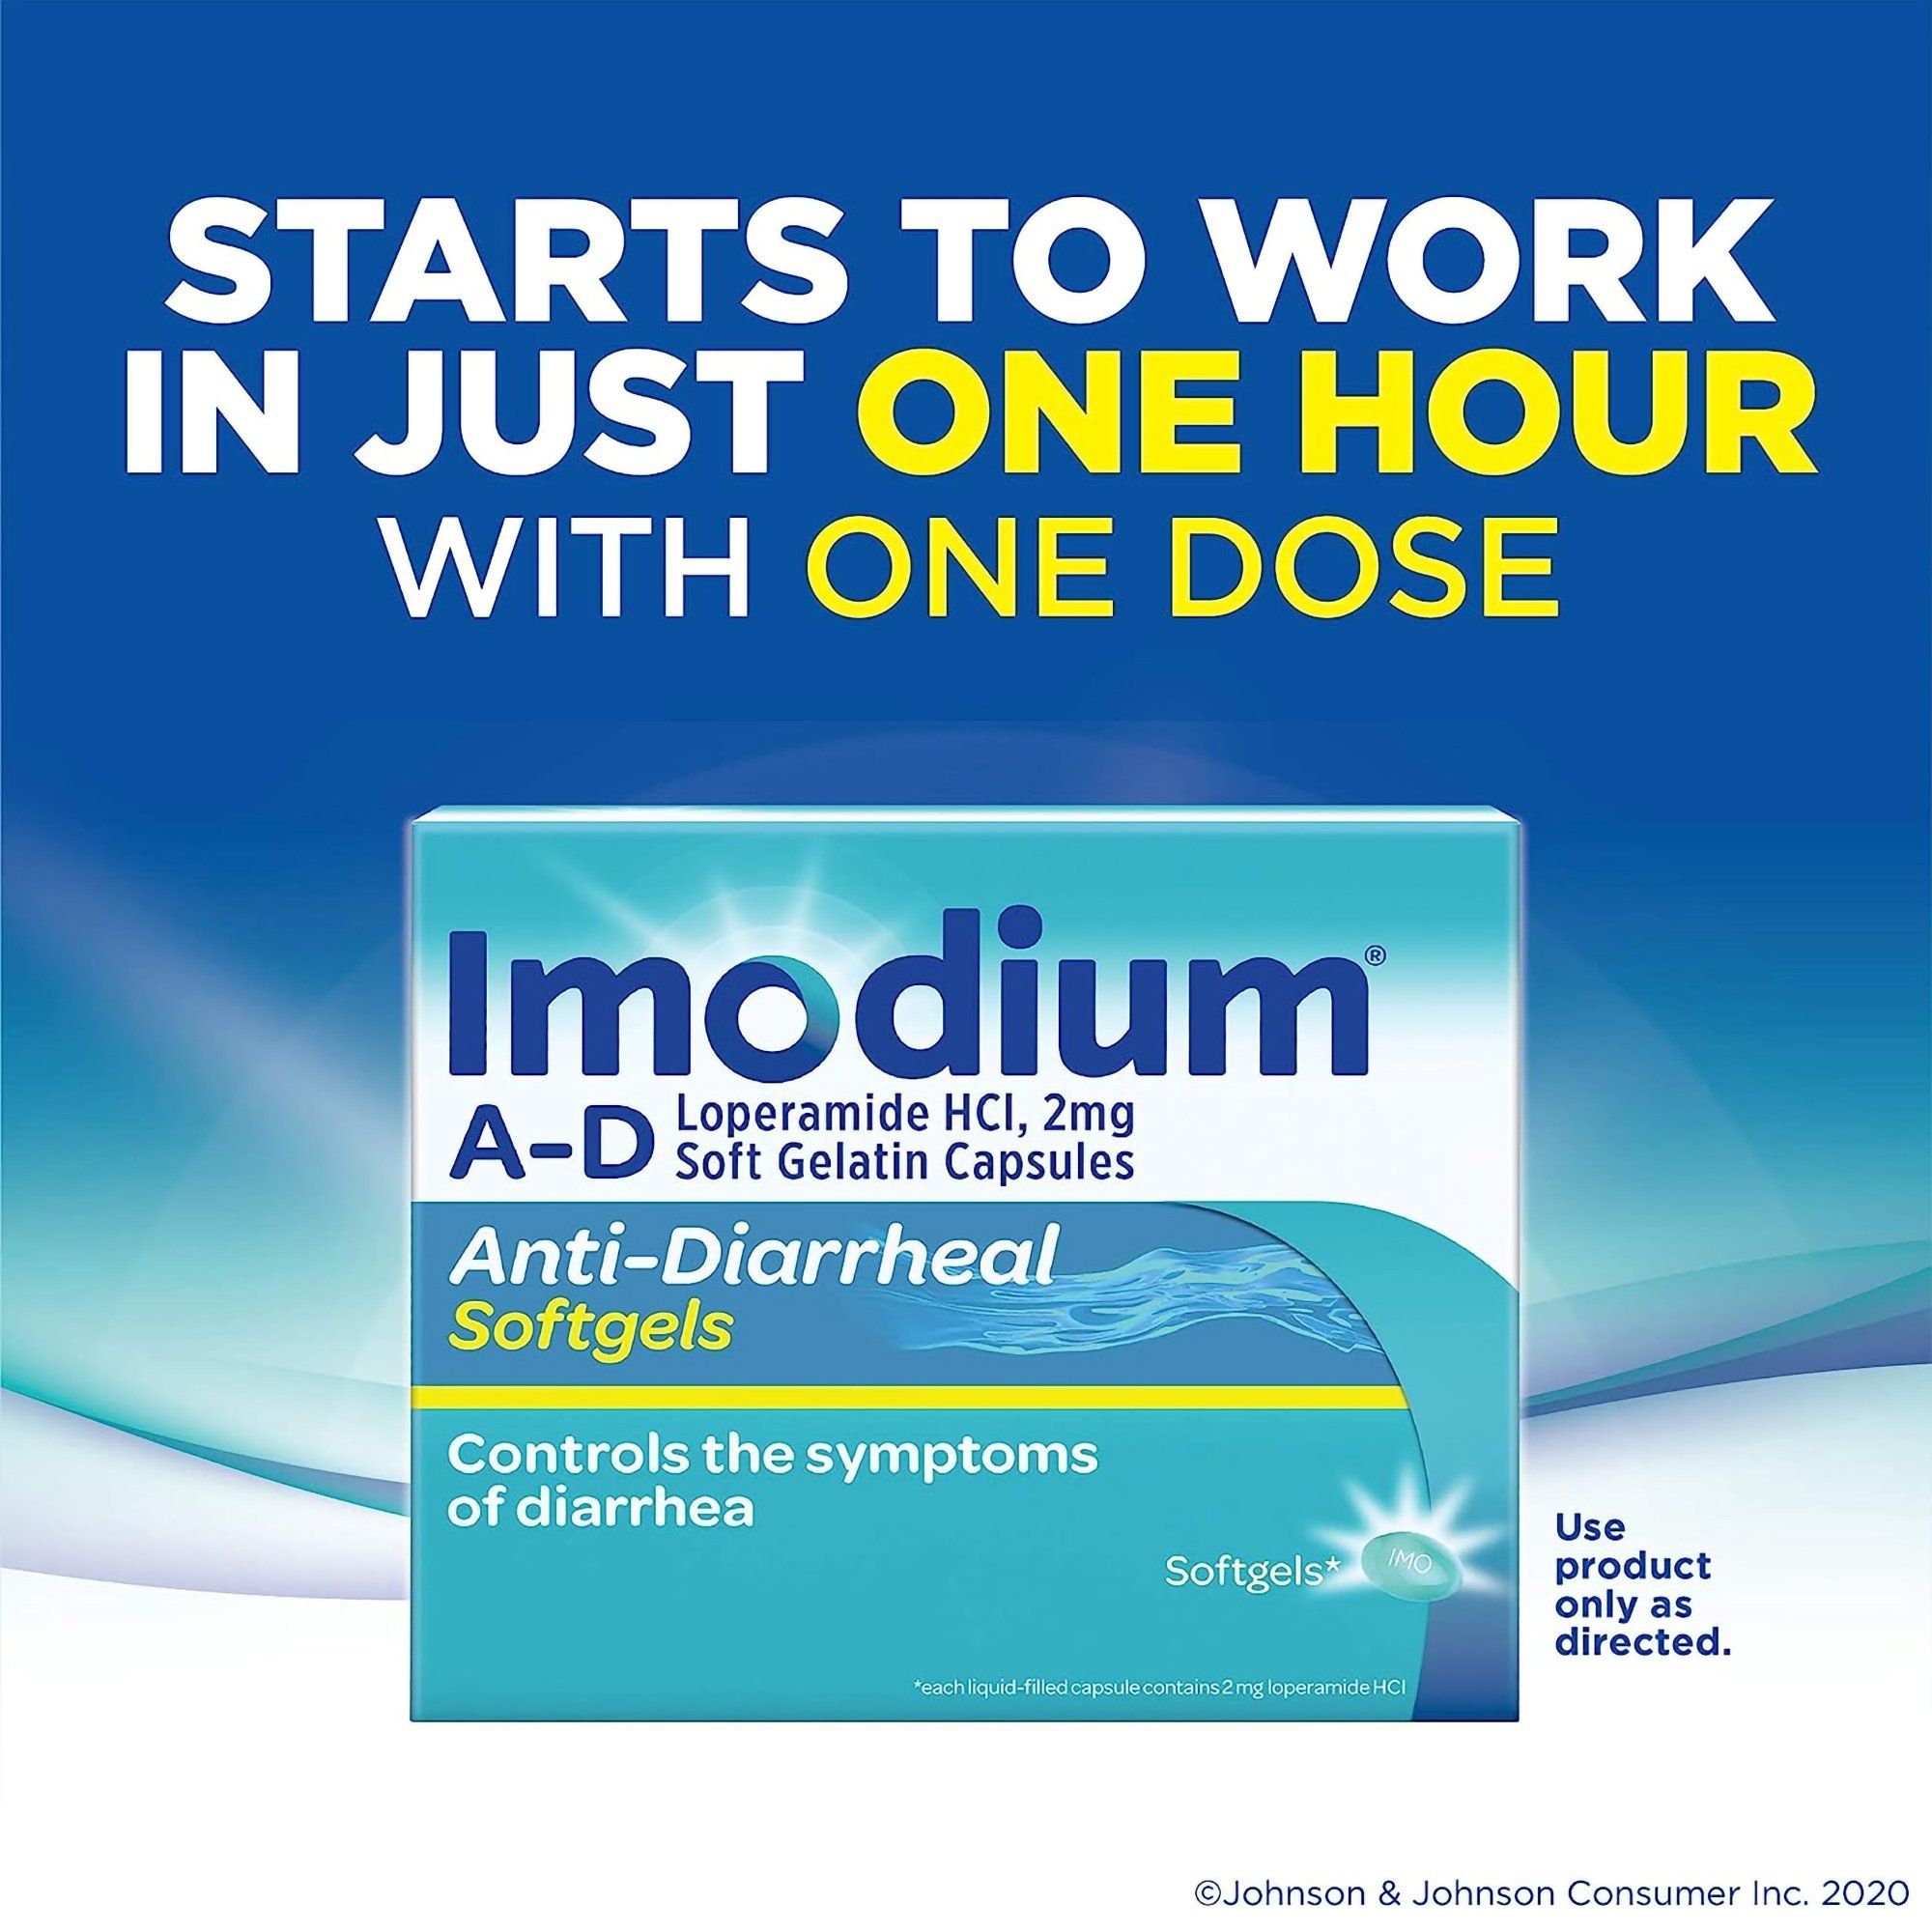 Imodium A-D Anti-Diarrheal Softgels  - 24 ct